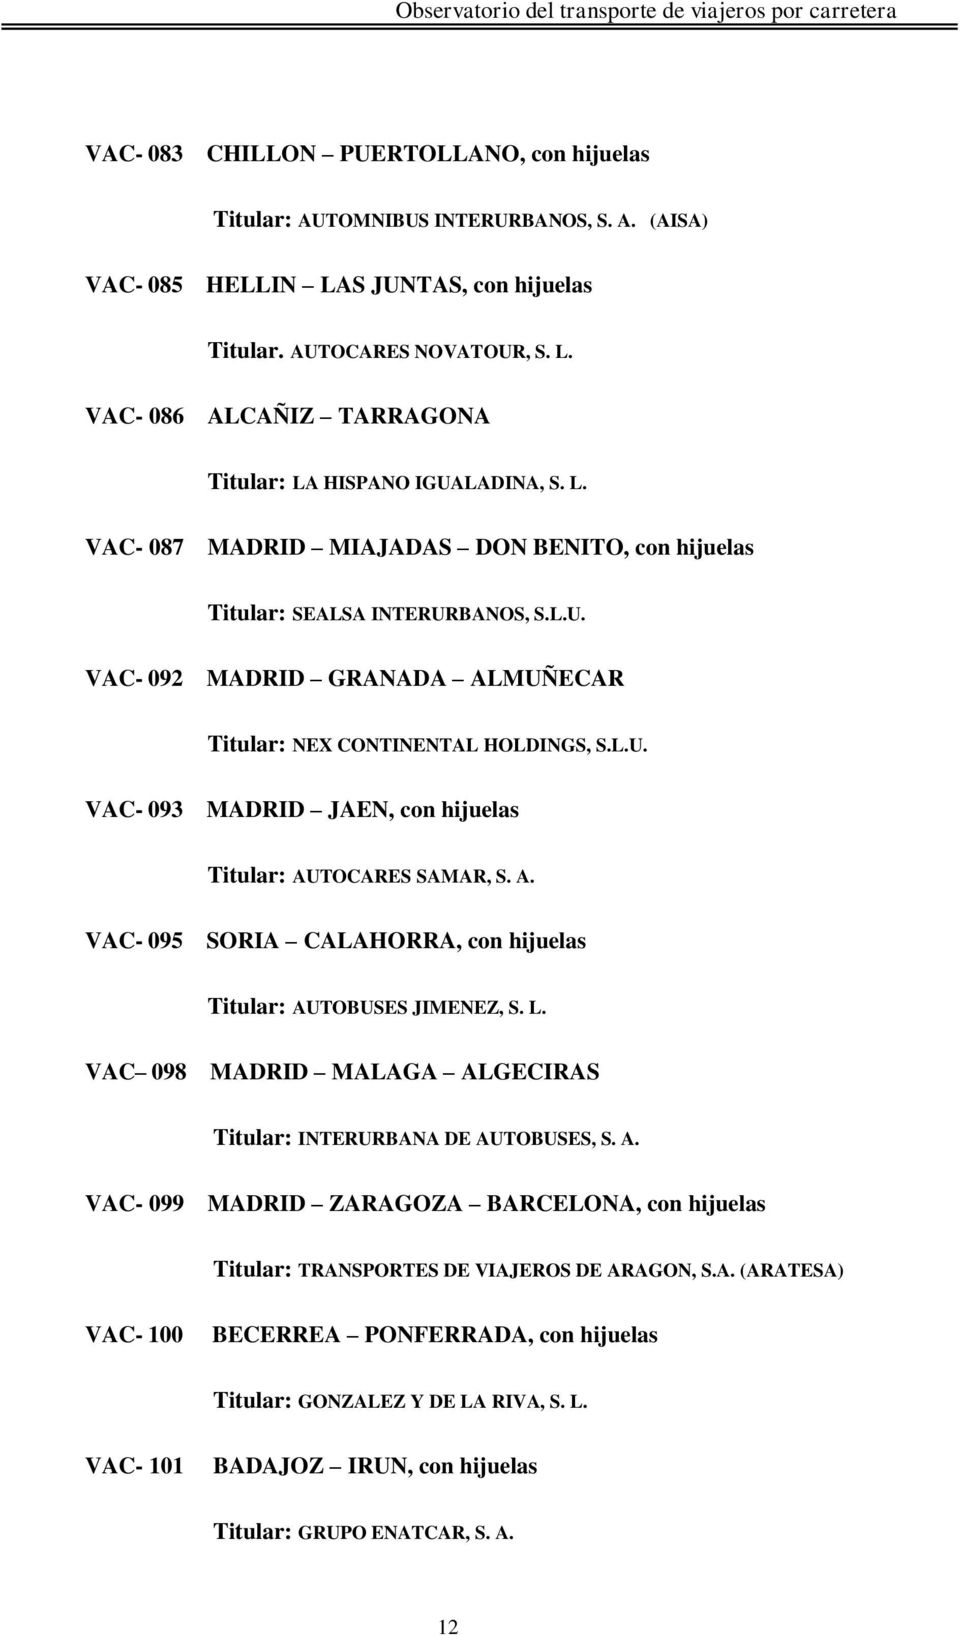 A. VAC- 095 SORIA CALAHORRA, con hijuelas Titular: AUTOBUSES JIMENEZ, S. L. VAC 098 MADRID MALAGA ALGECIRAS Titular: INTERURBANA DE AUTOBUSES, S. A. VAC- 099 MADRID ZARAGOZA BARCELONA, con hijuelas Titular: TRANSPORTES DE VIAJEROS DE ARAGON, S.